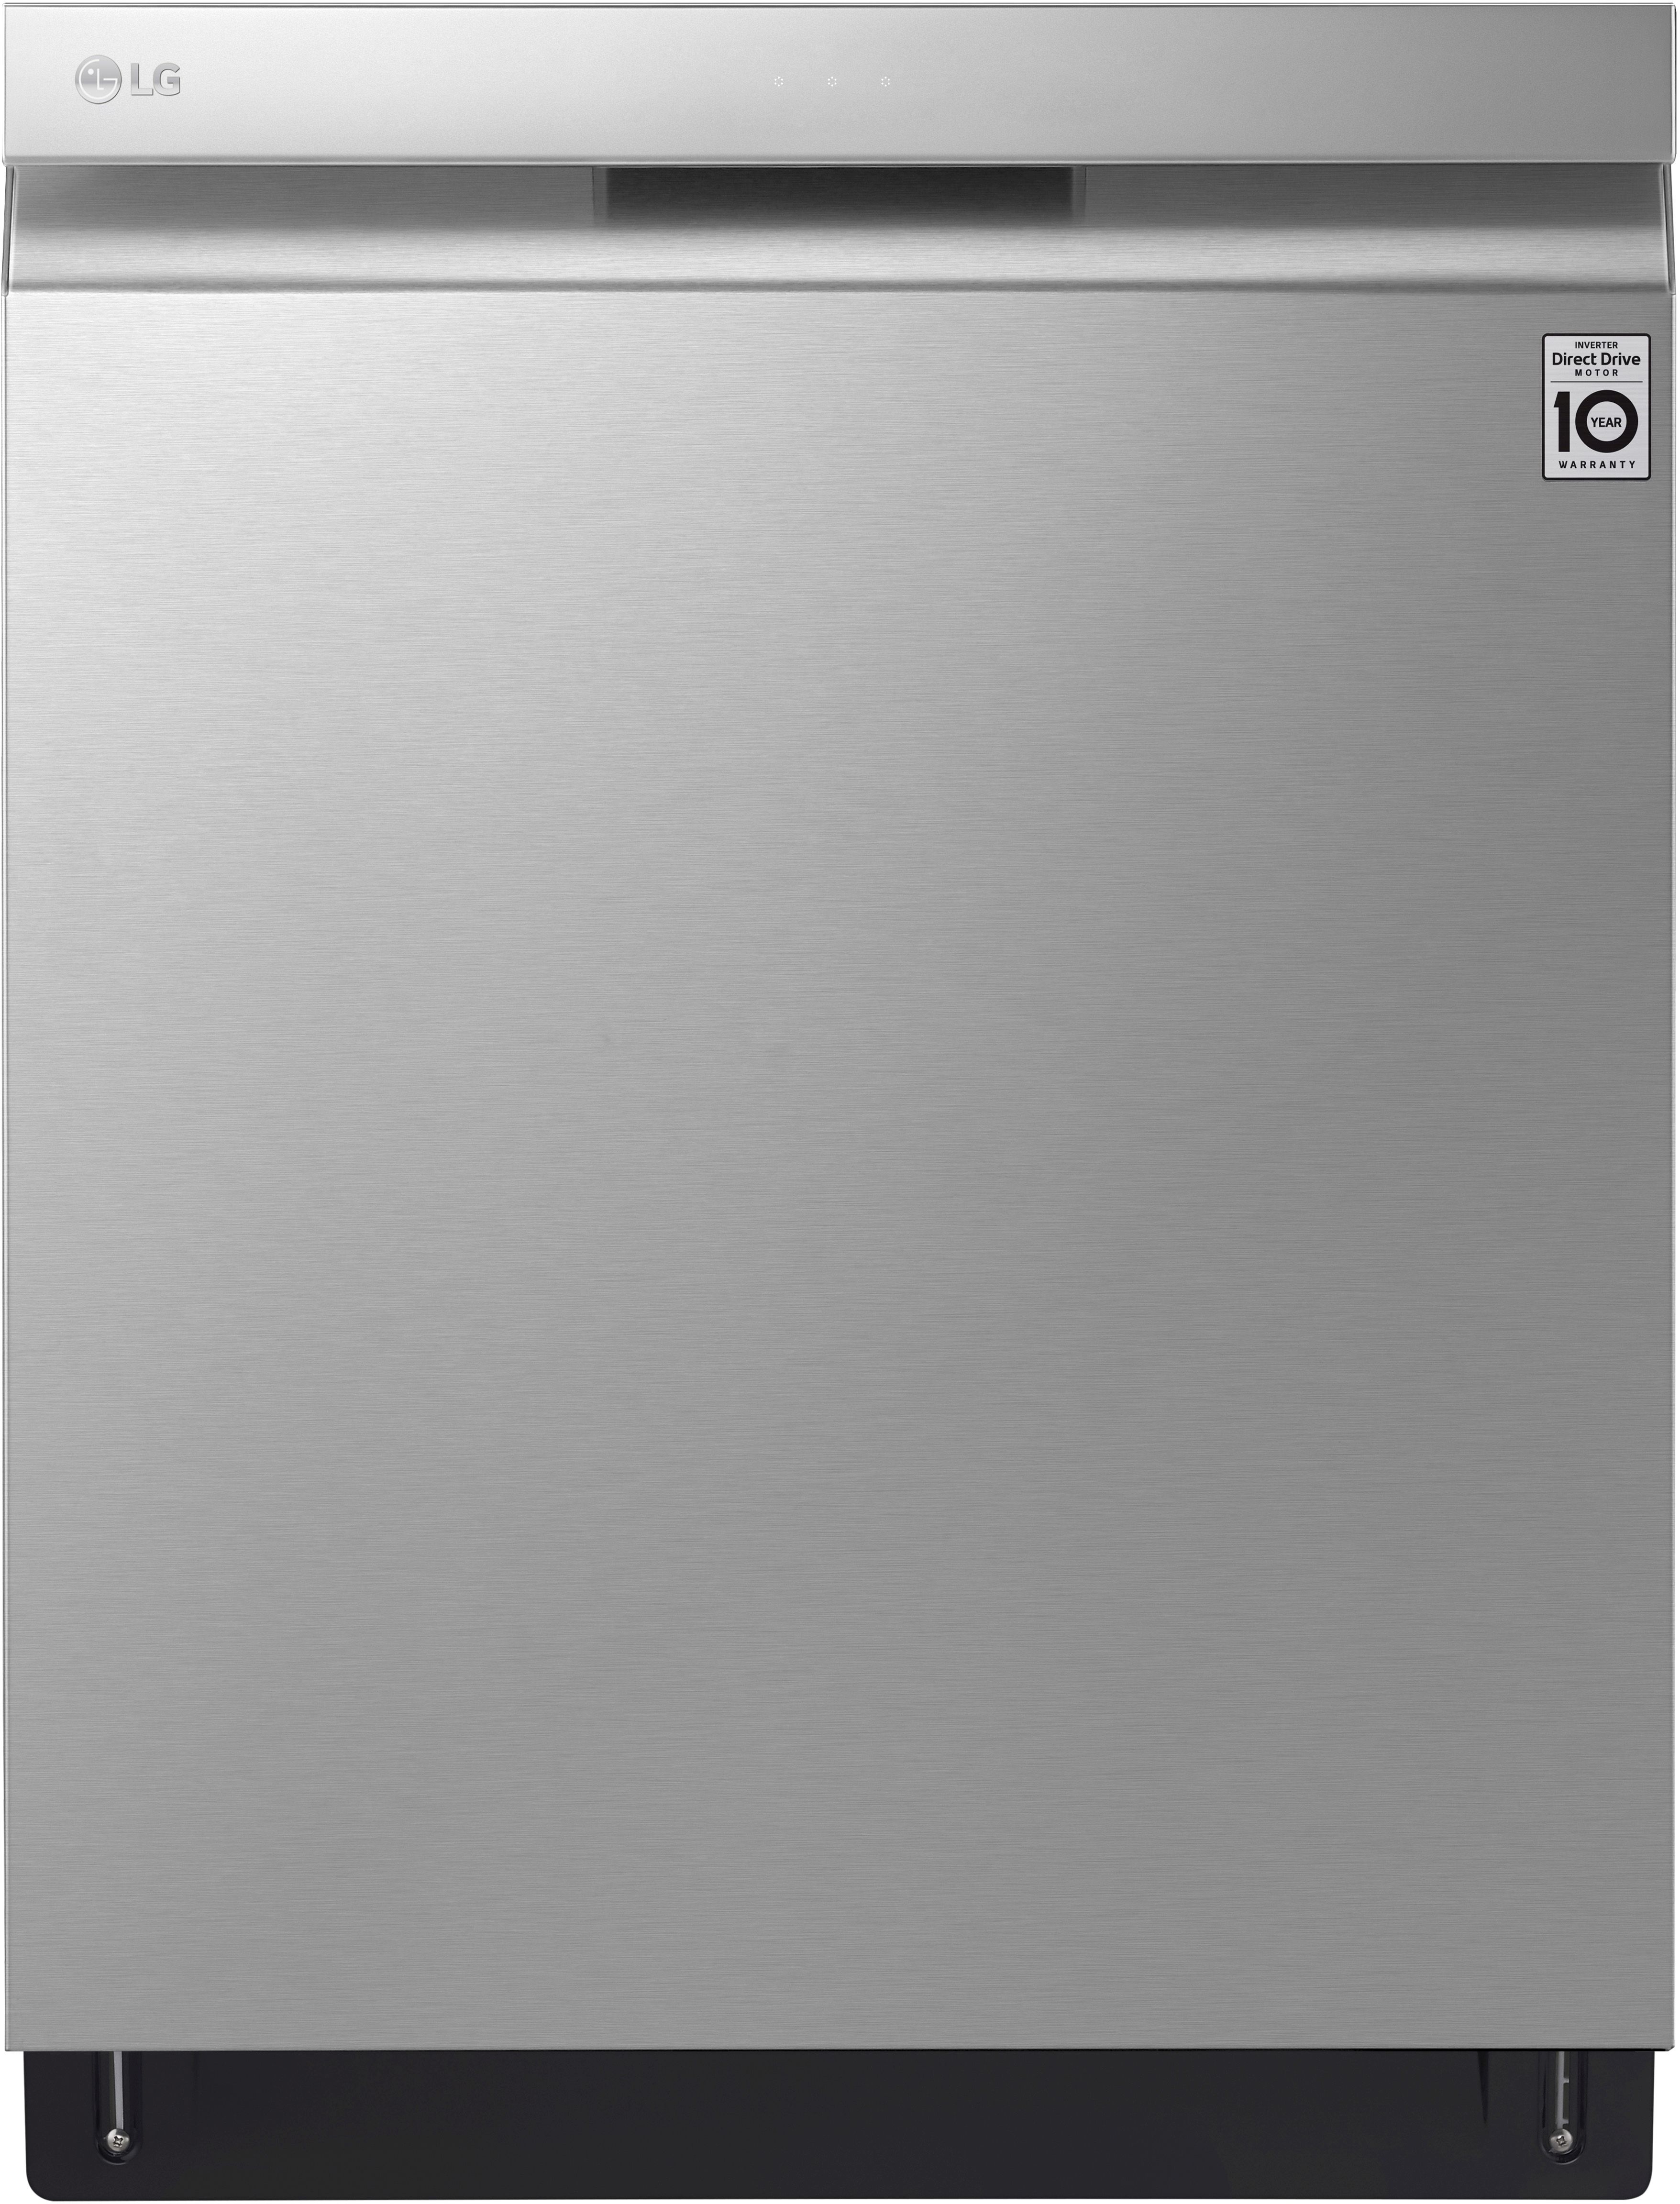 LG 24" PrintProof™ Stainless Steel Built In Dishwasher